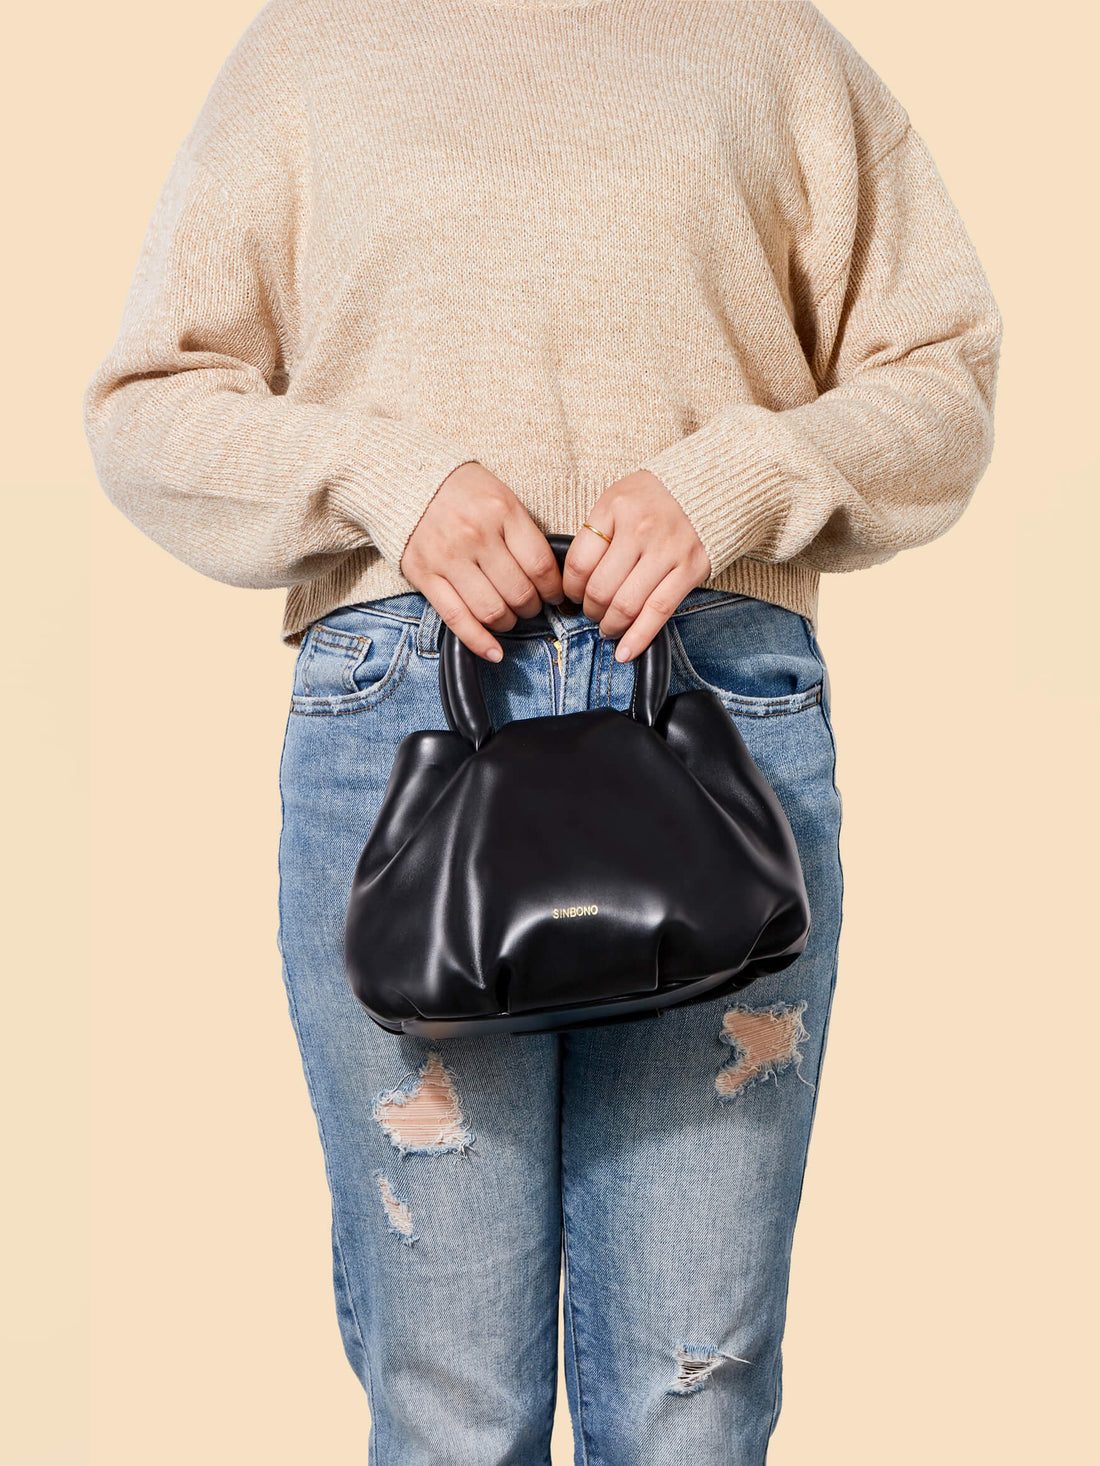 SINBONO Gal Black Leather Handbags -Vegan Leather Women Bag